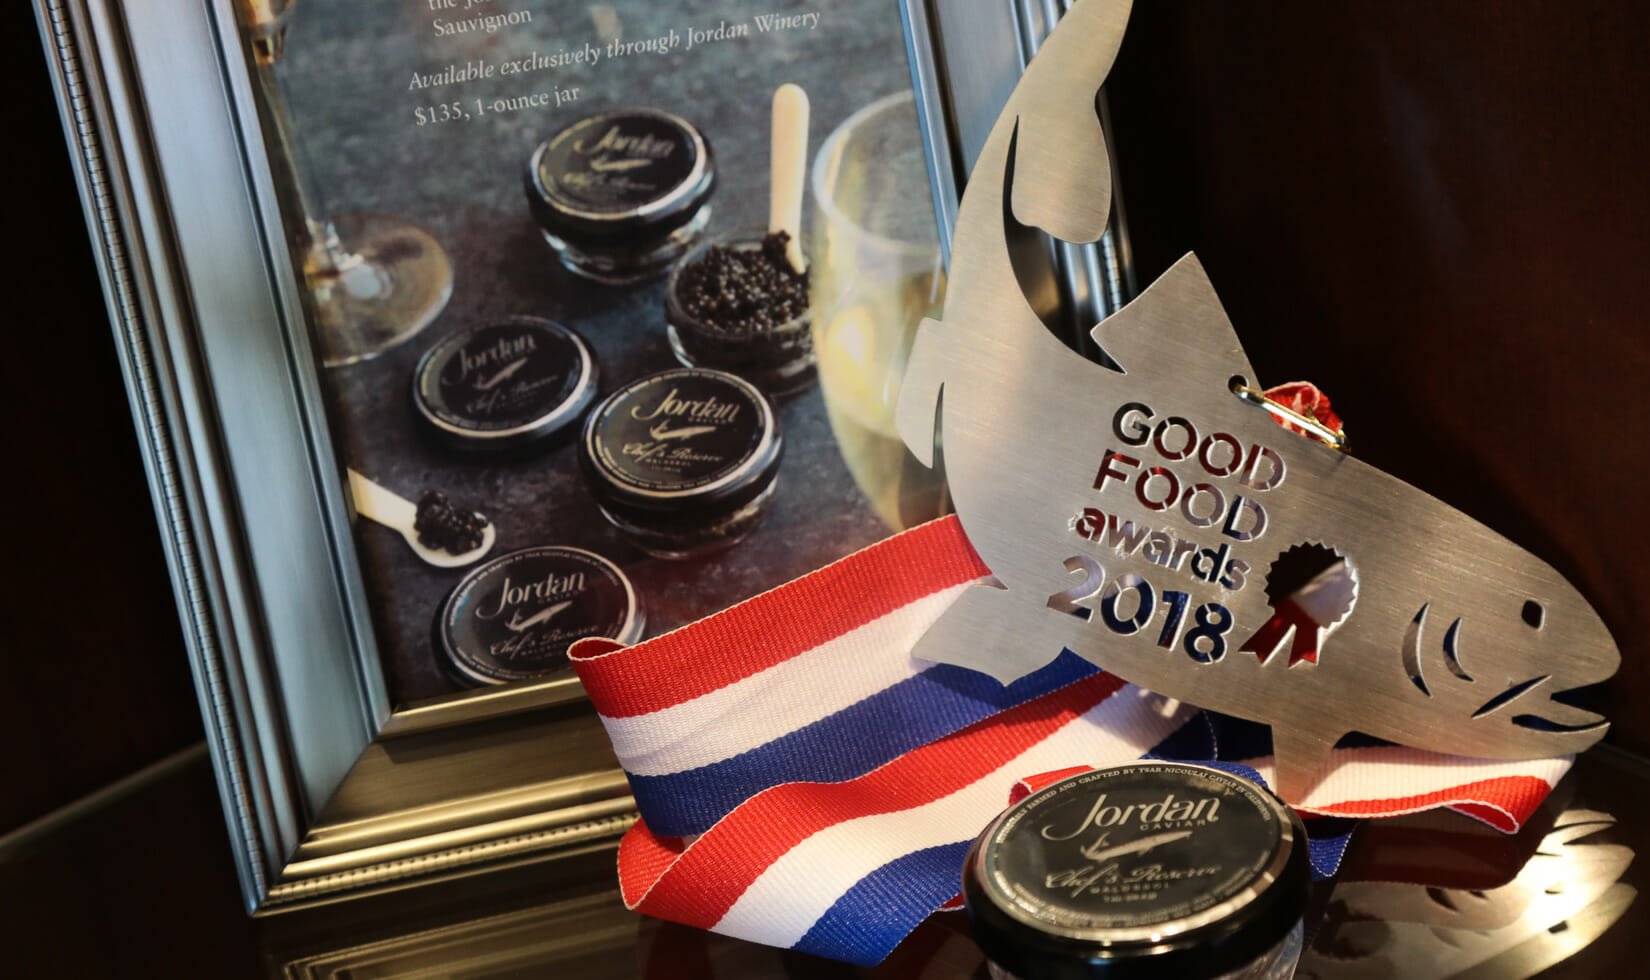 2018 good food awards medallion displayed at Jordan Winery